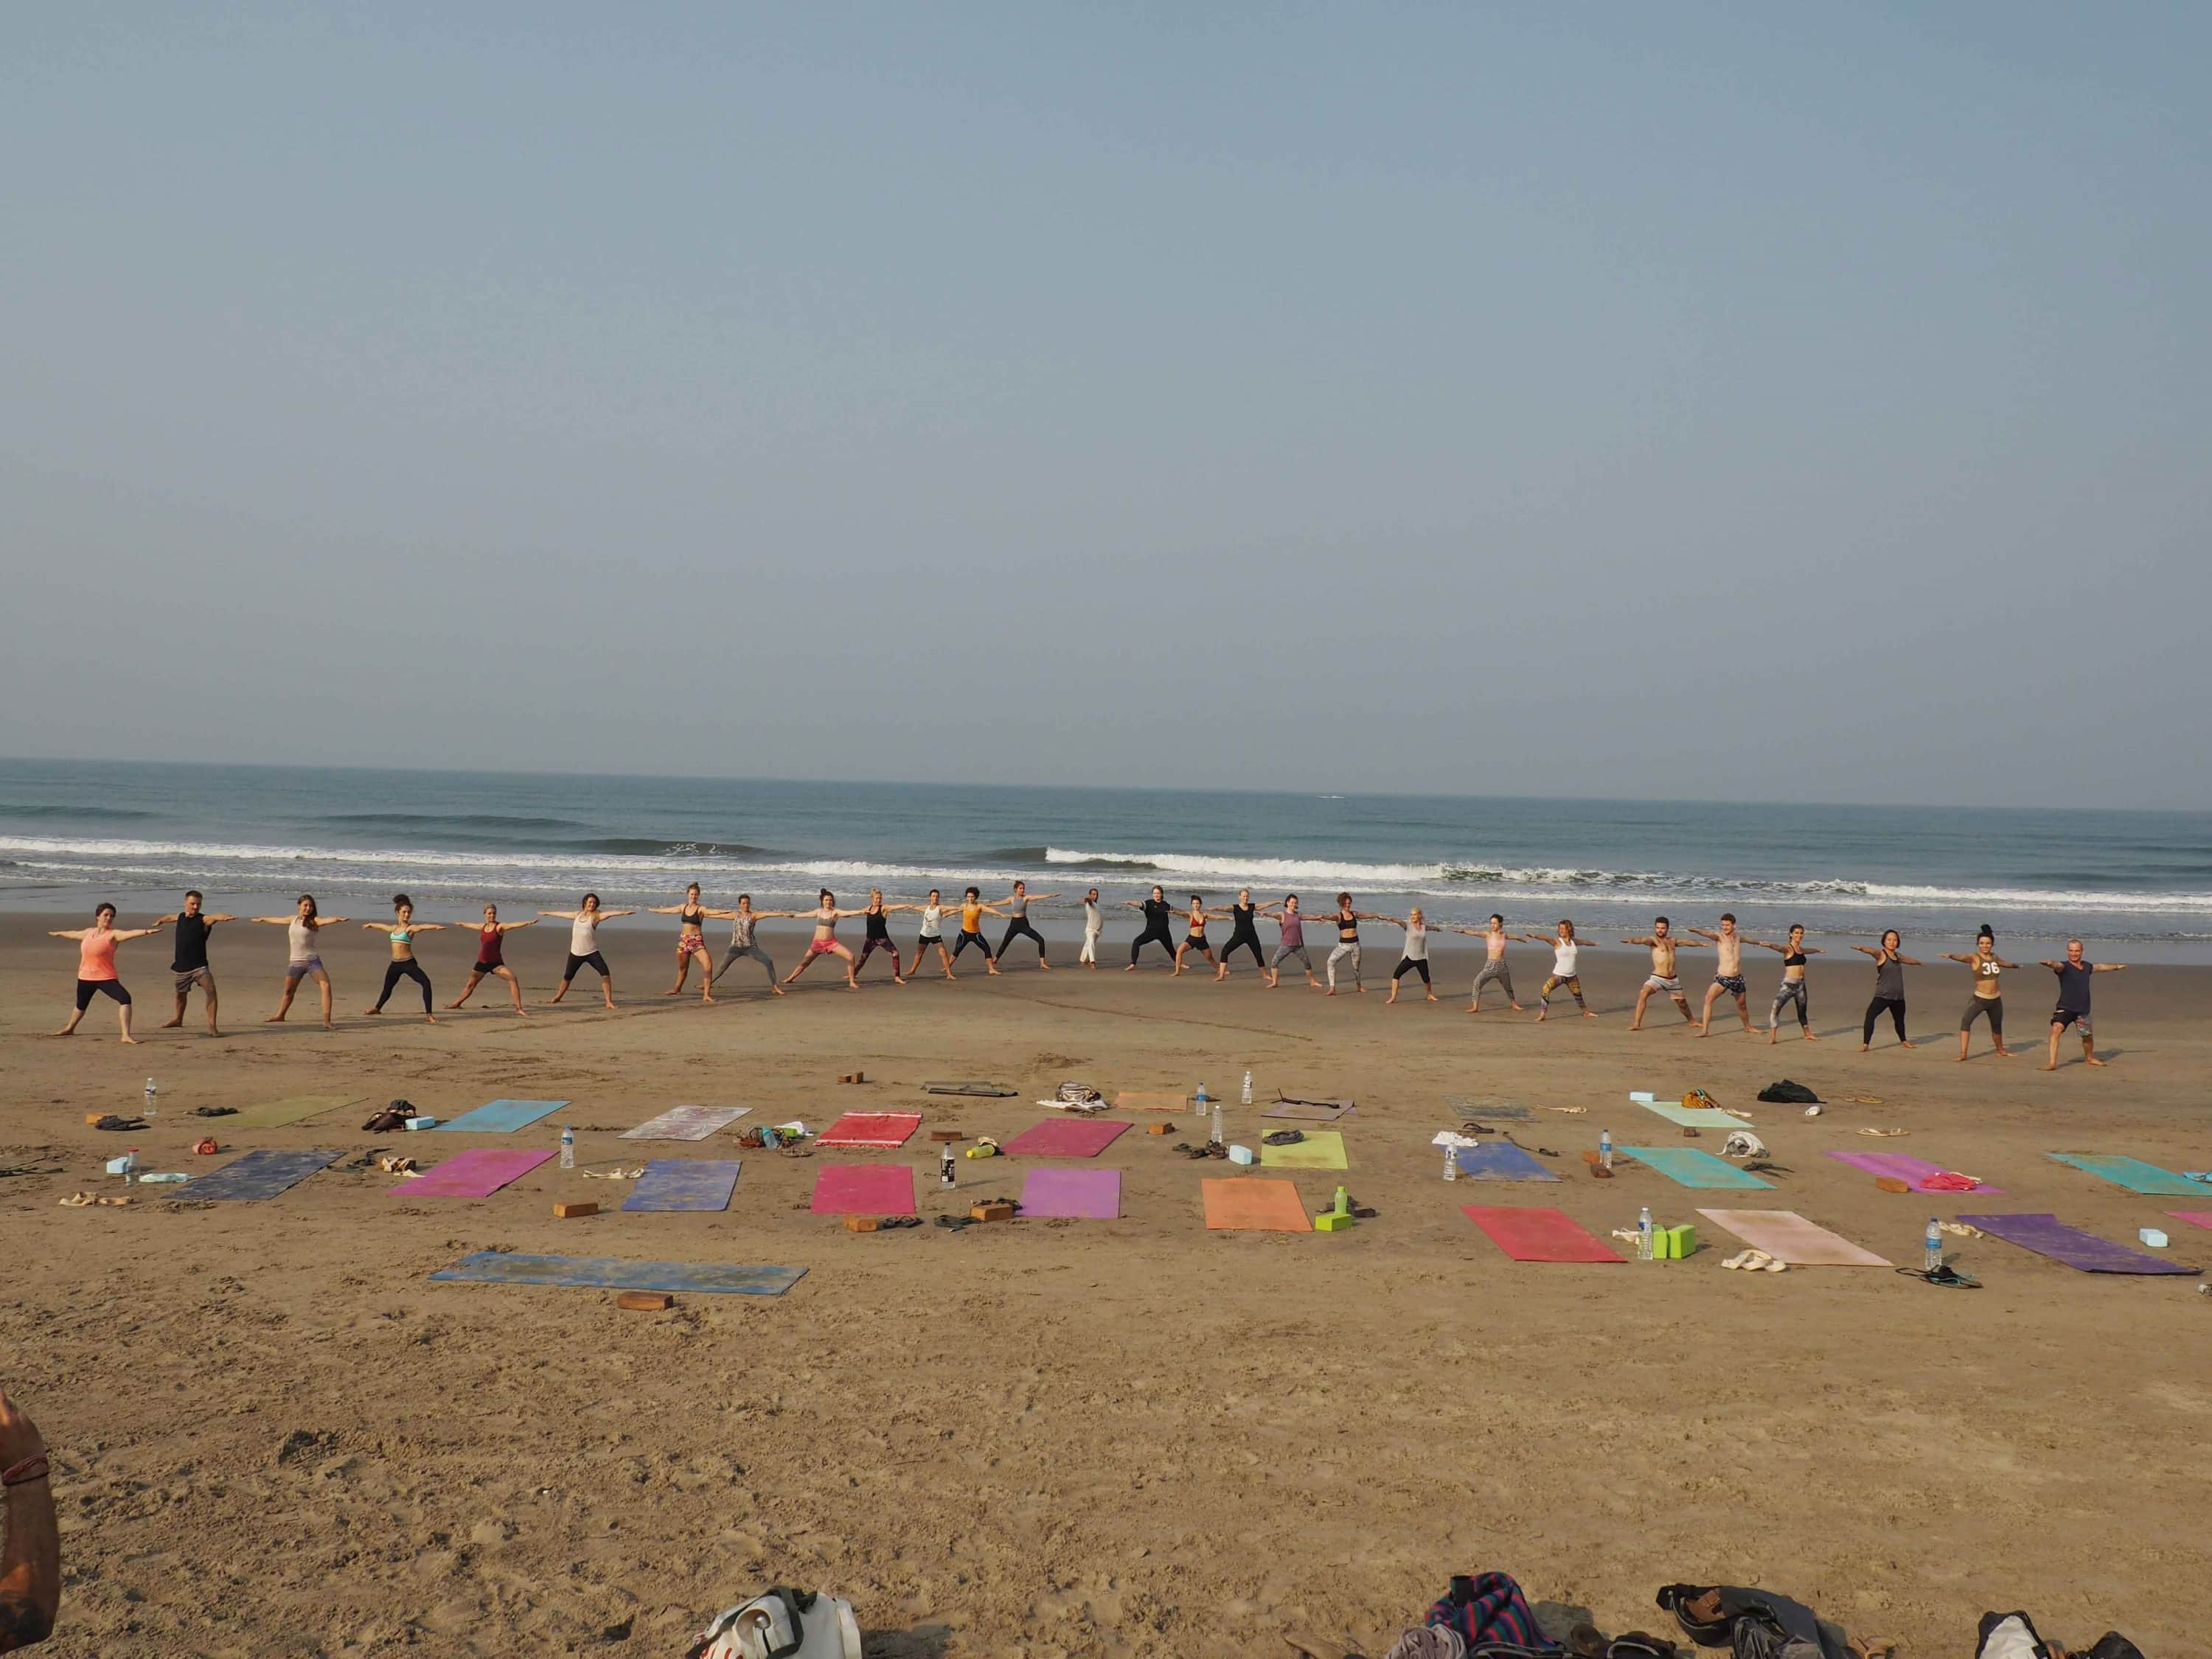 200 hrs ashtanga yoga teacher training at vishuddhi yoga school in goa, india31525947112.jpg